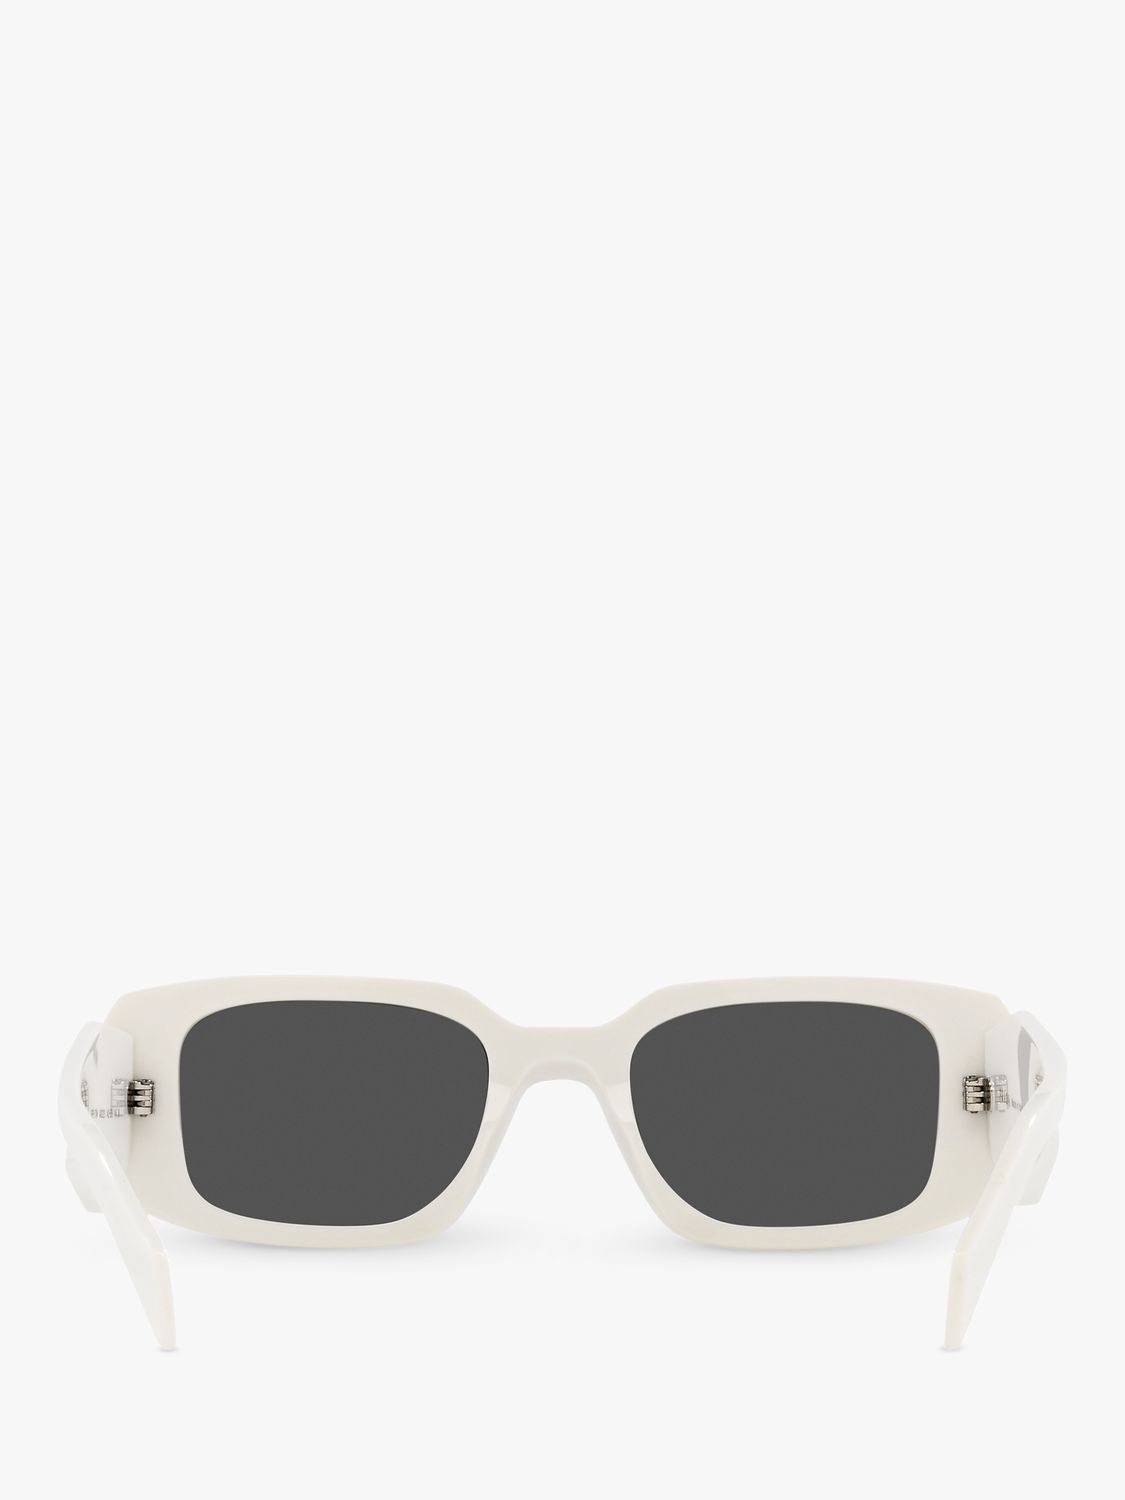 Prada PR17WS Women's Rectangular Sunglasses, White/Black